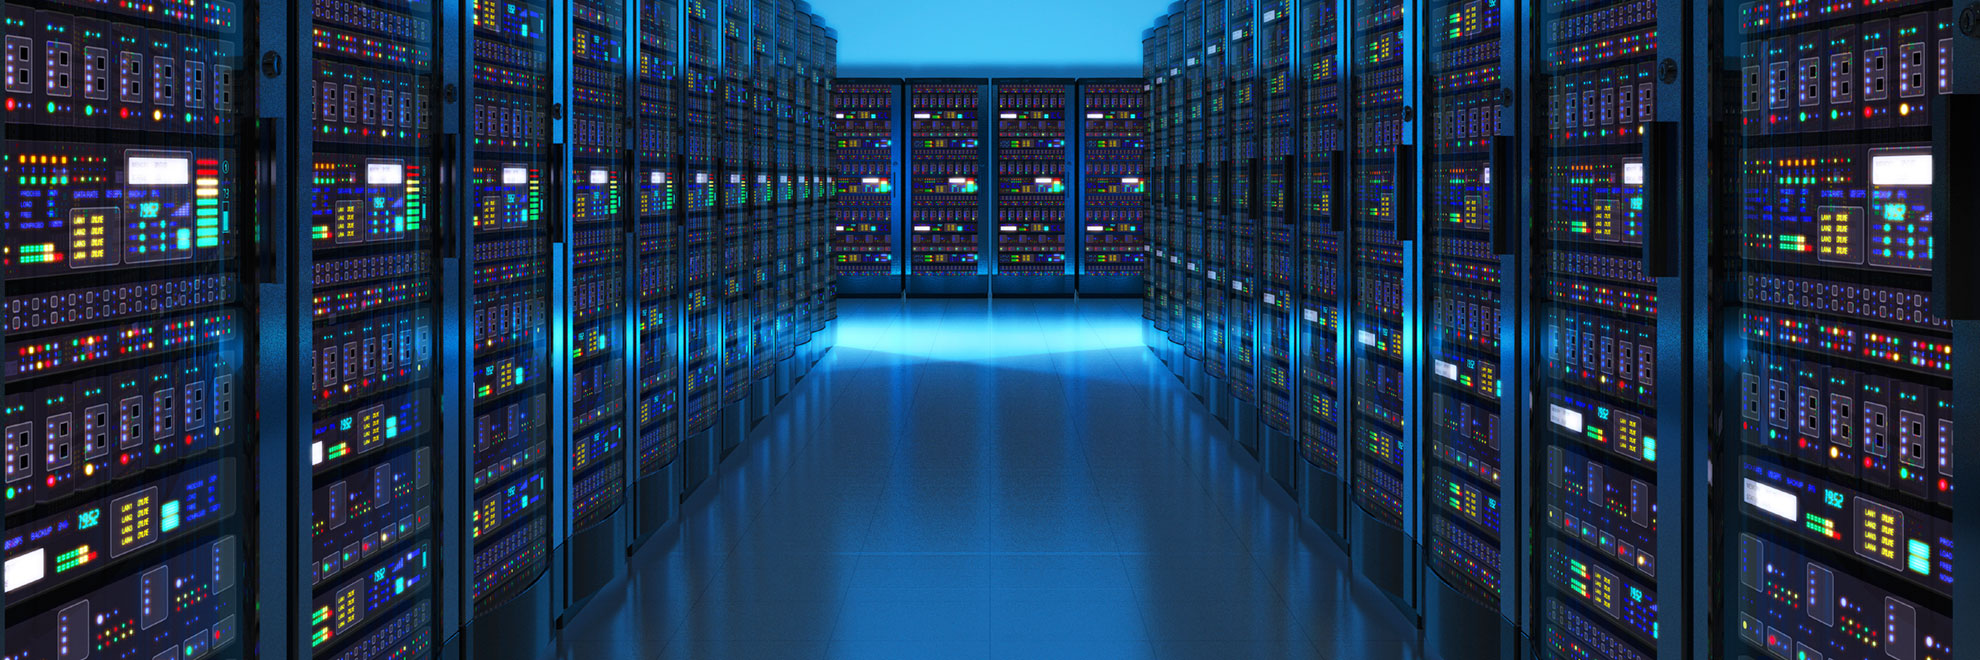 server datacenter